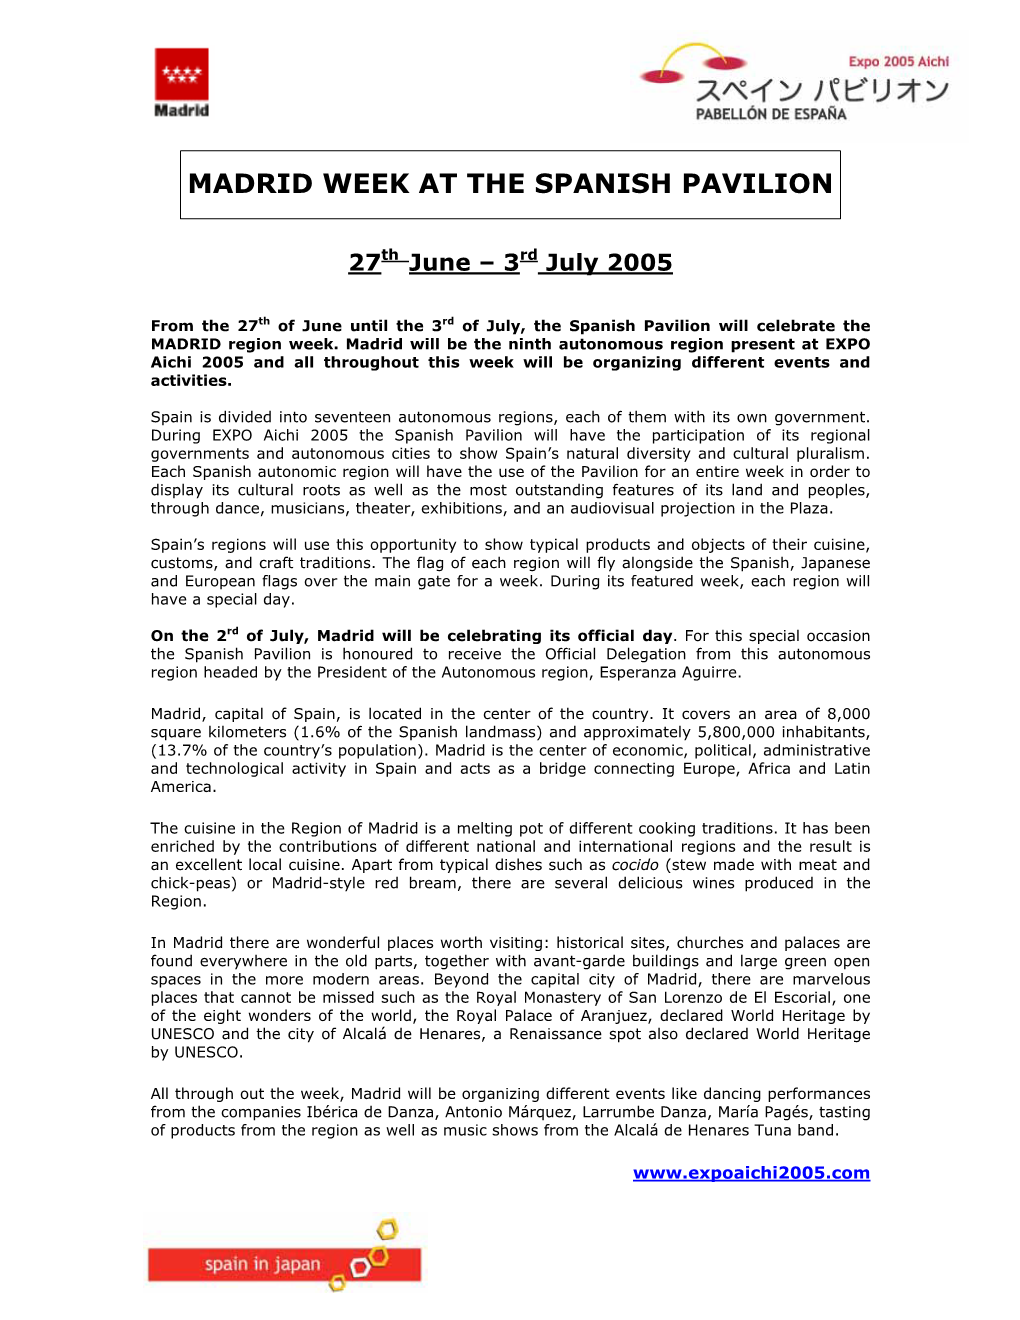 Madrid Week at the Spanish Pavilion